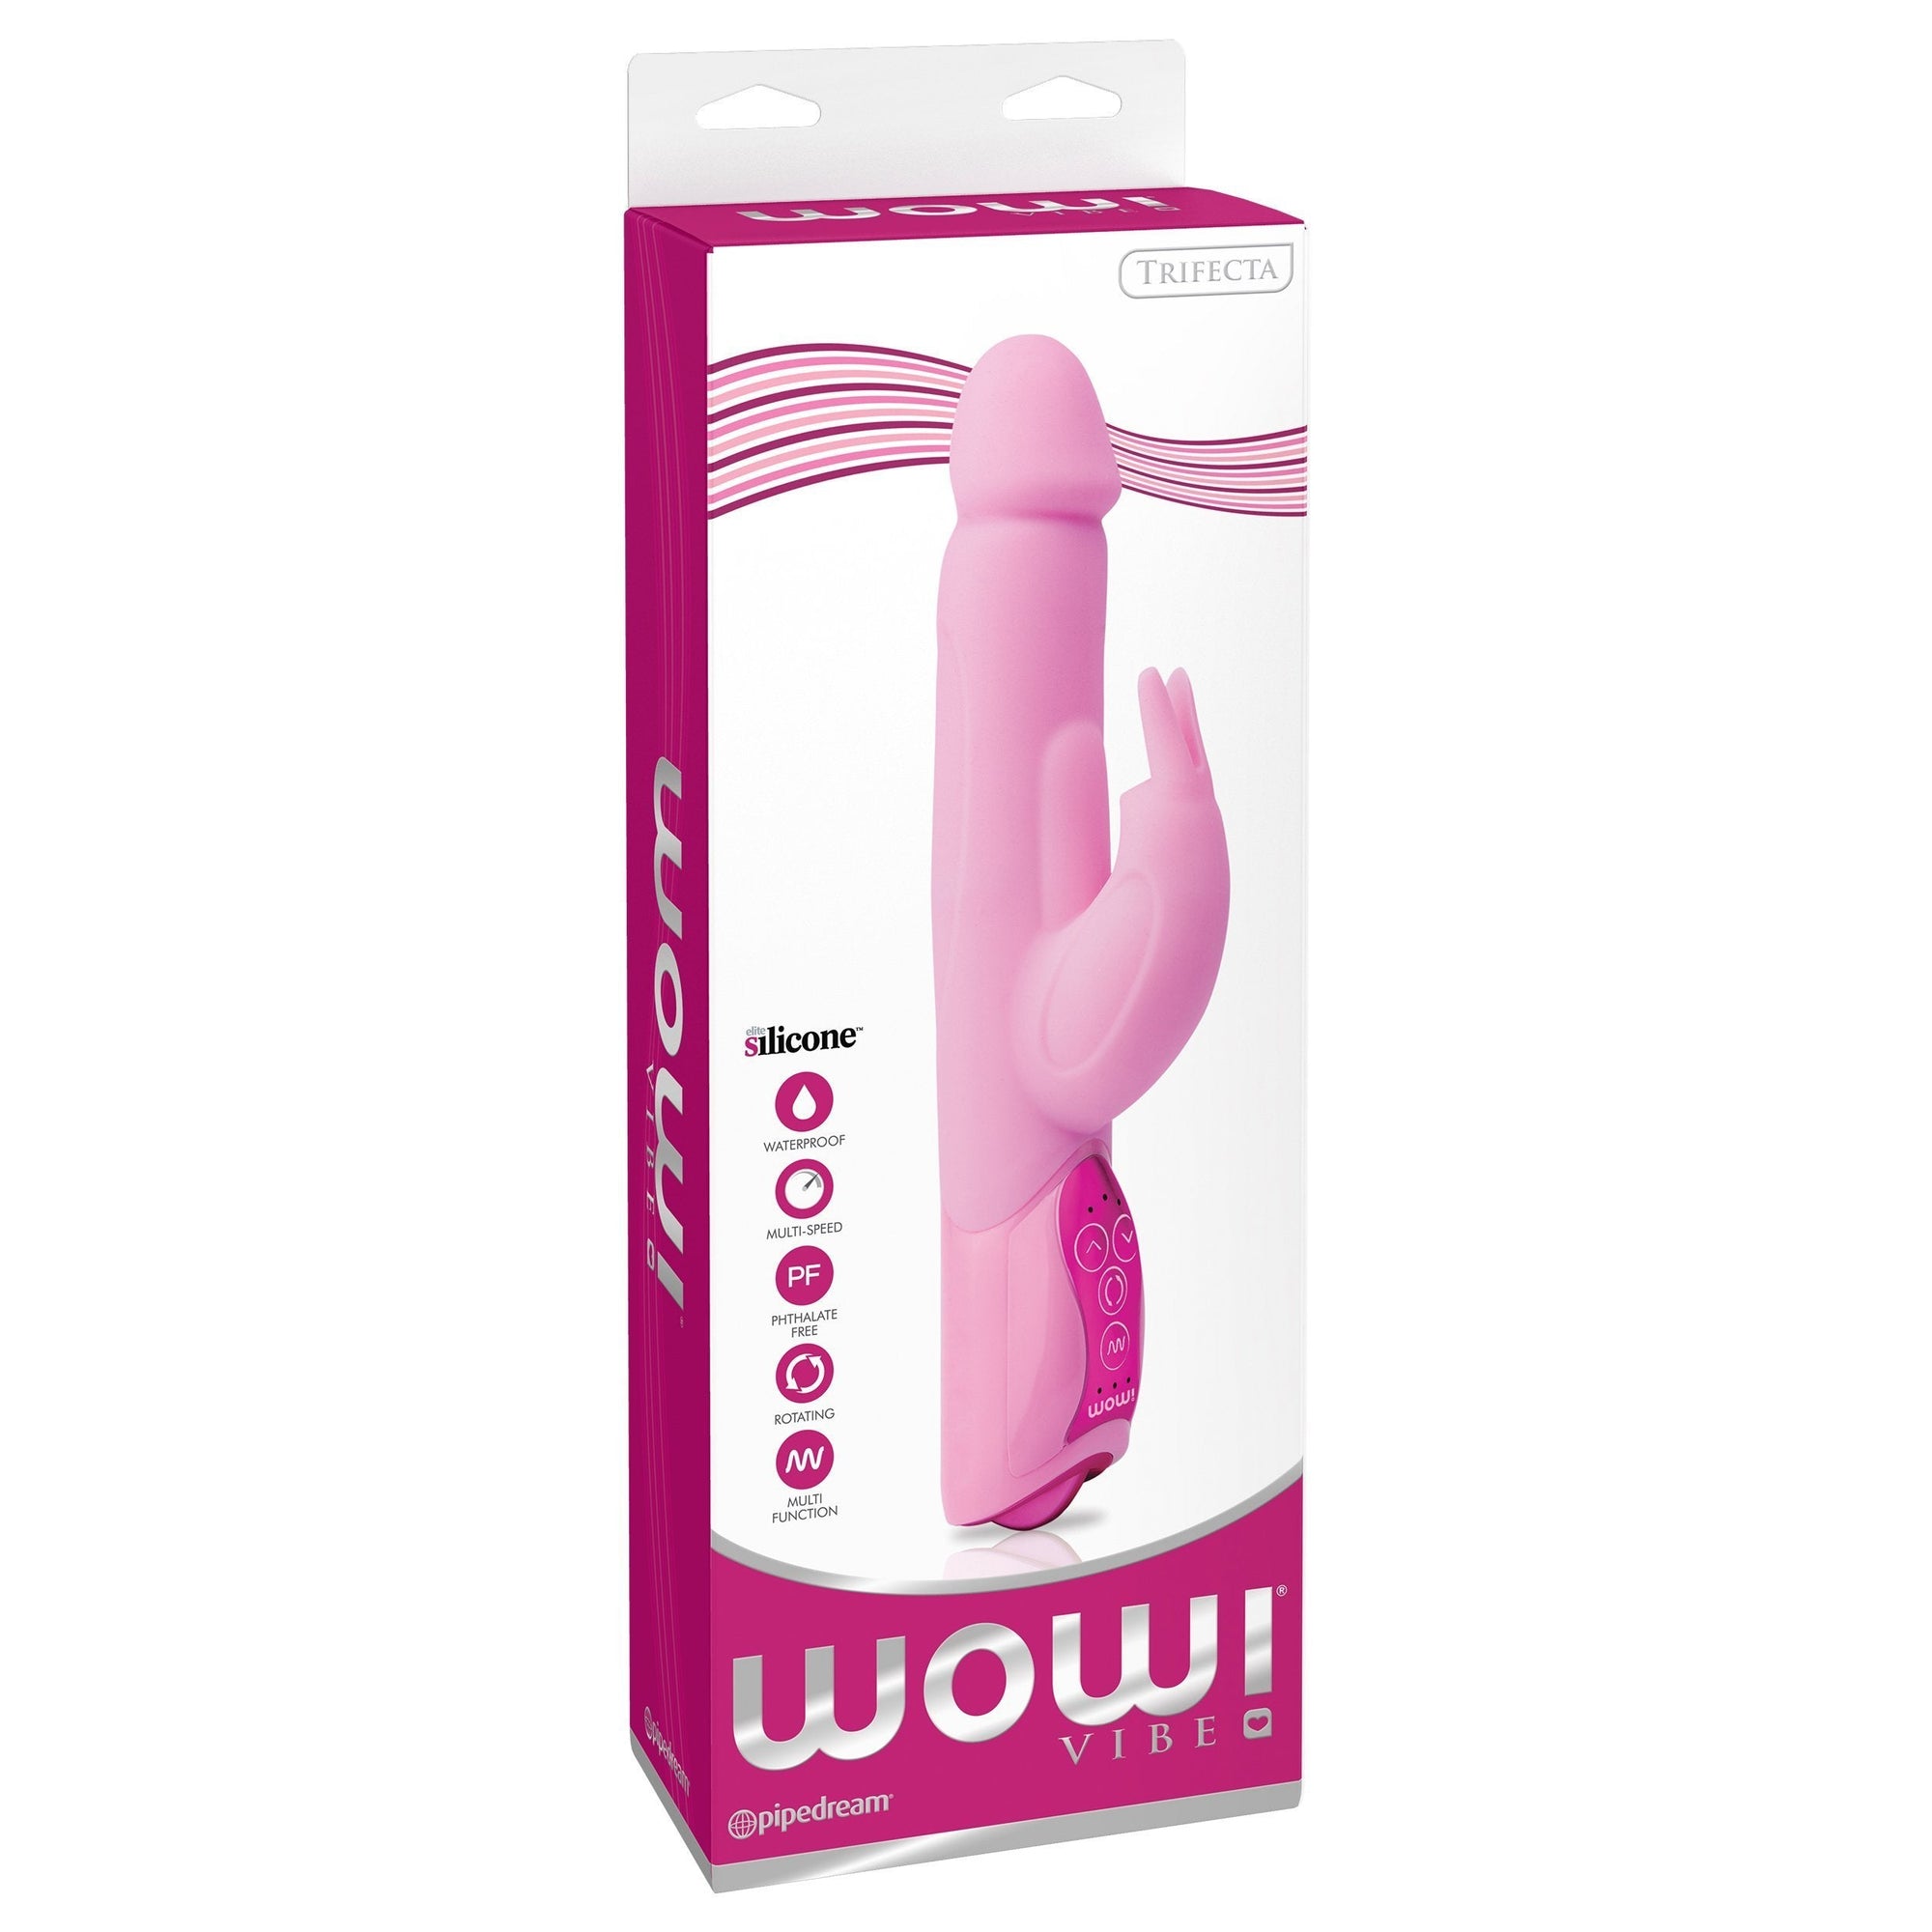 Pipedream - Wow! Trifecta Rabbit Vibrator (Pink) -  Rabbit Dildo (Vibration) Non Rechargeable  Durio.sg